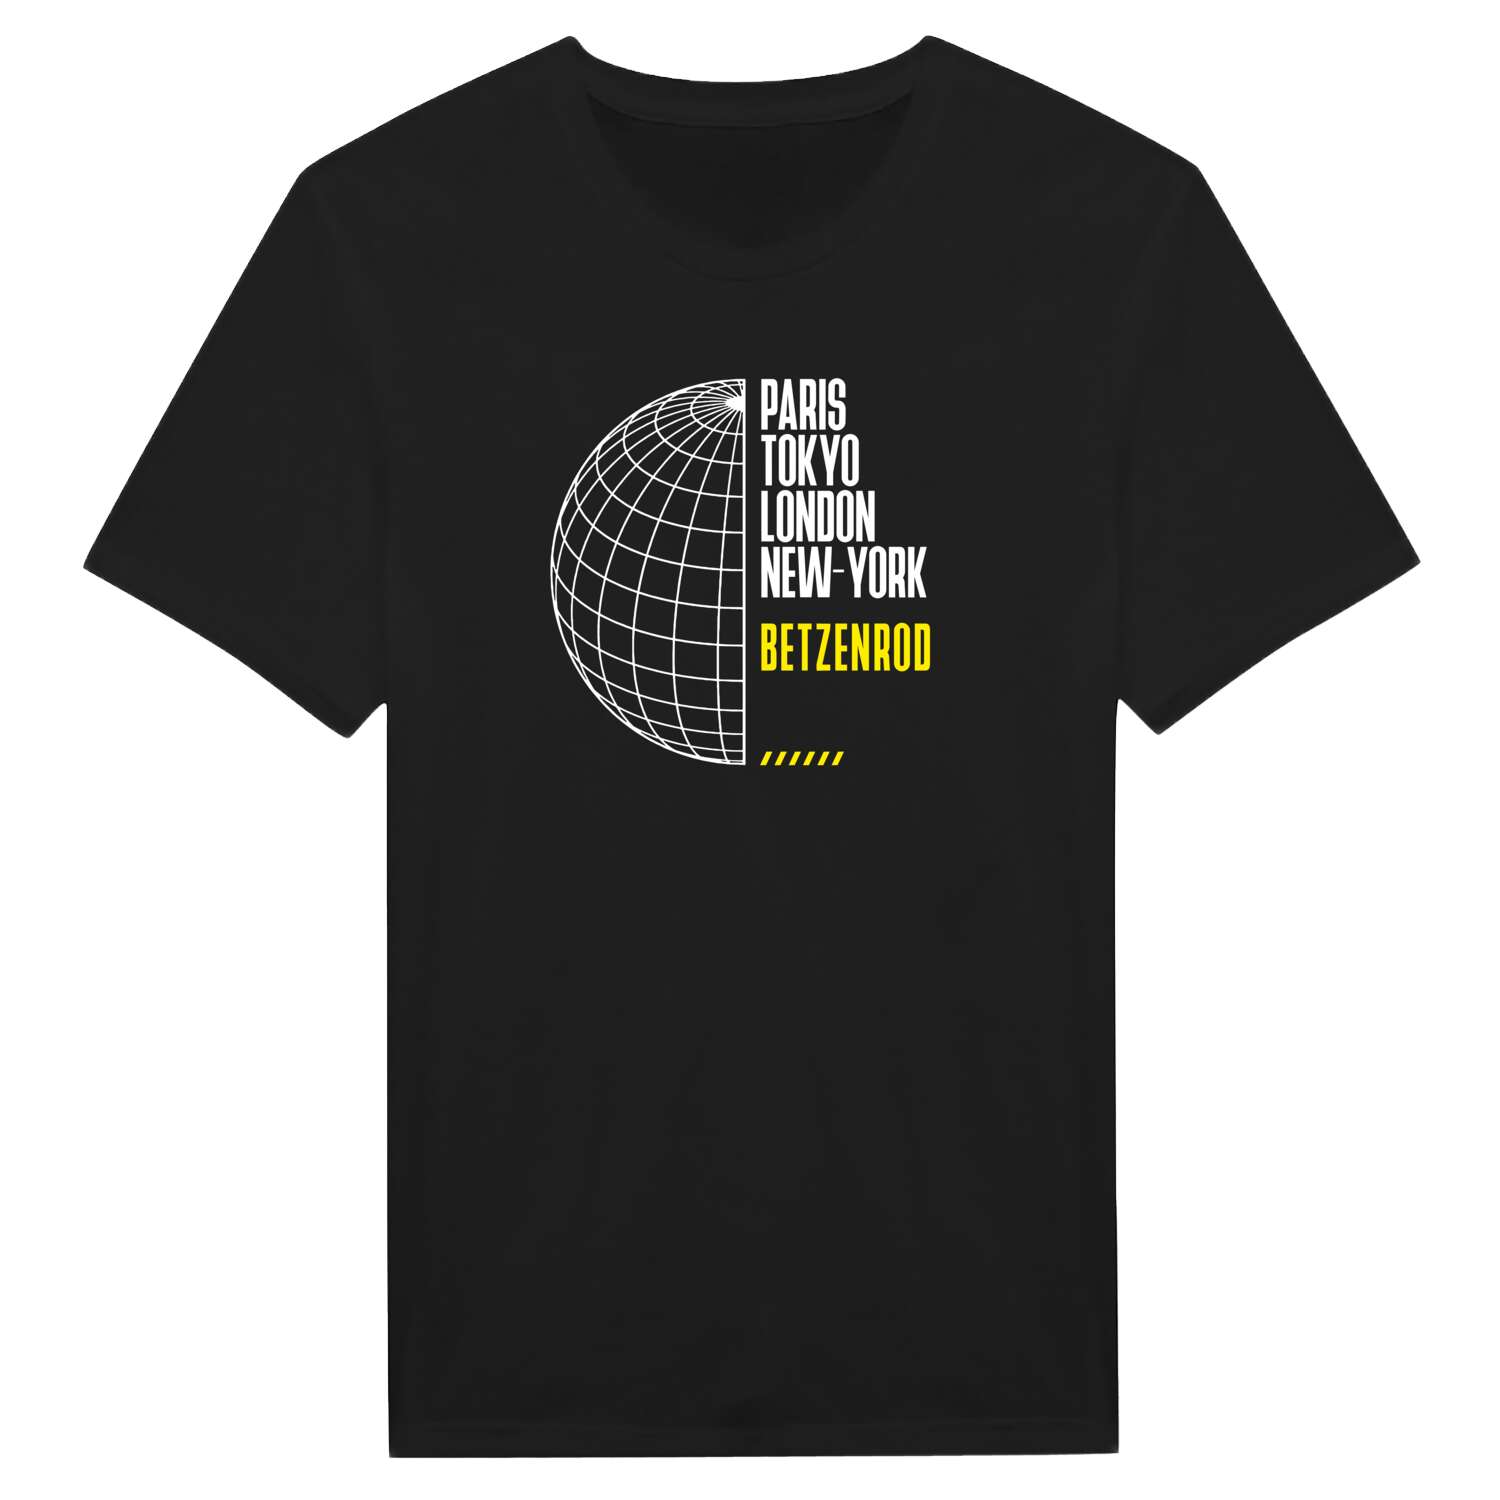 Betzenrod T-Shirt »Paris Tokyo London«